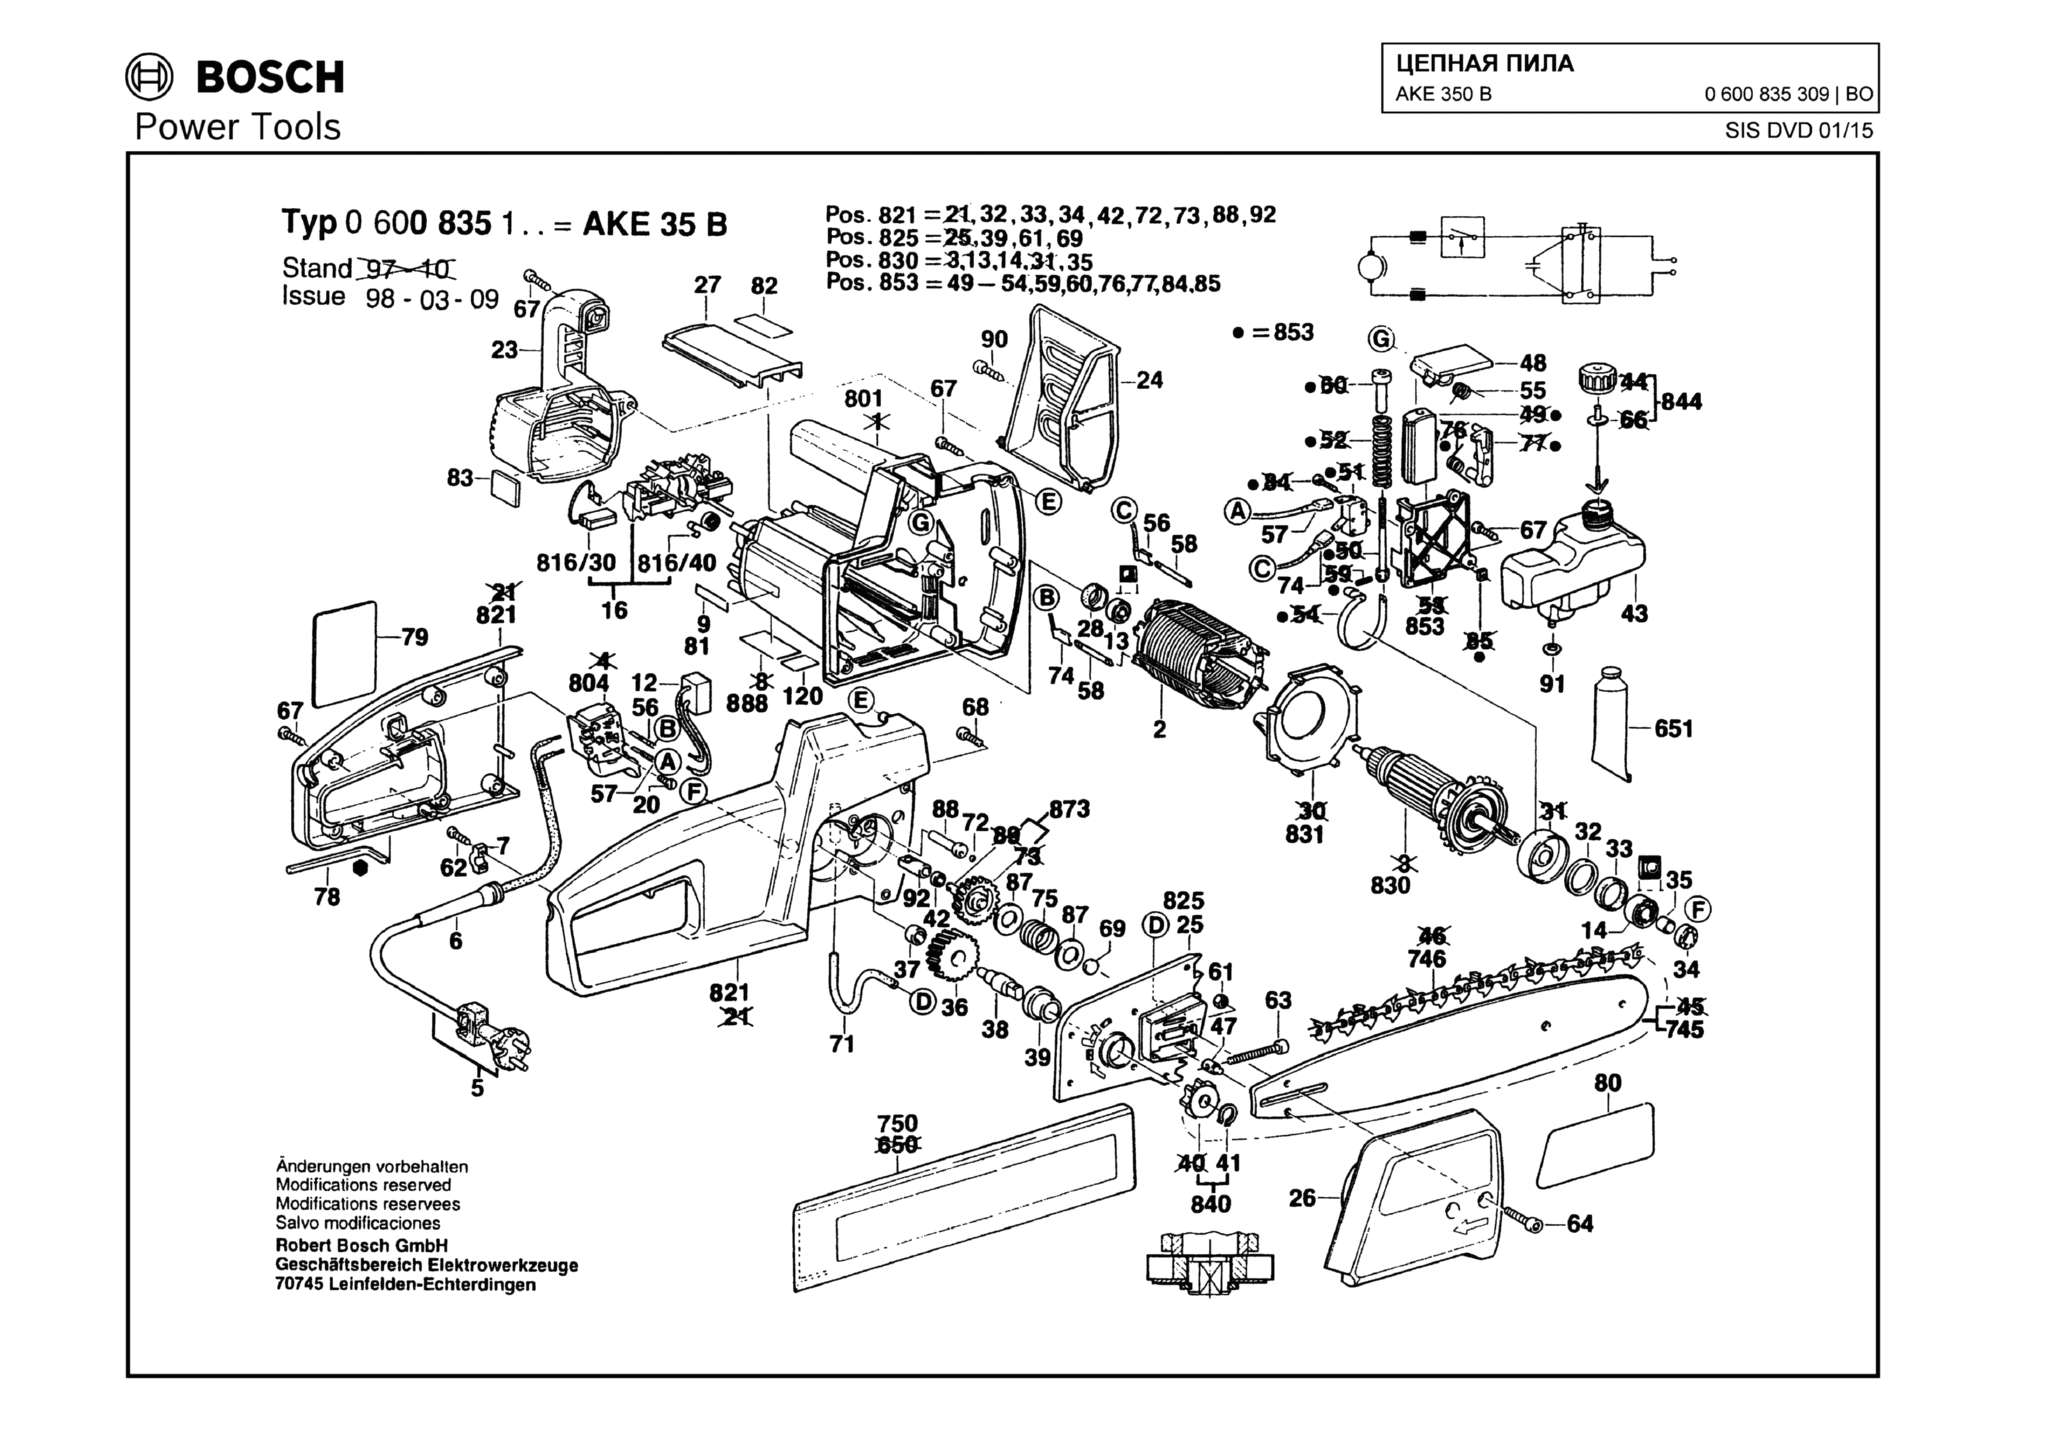 Запчасти, схема и деталировка Bosch AKE 350 B (ТИП 0600835309)